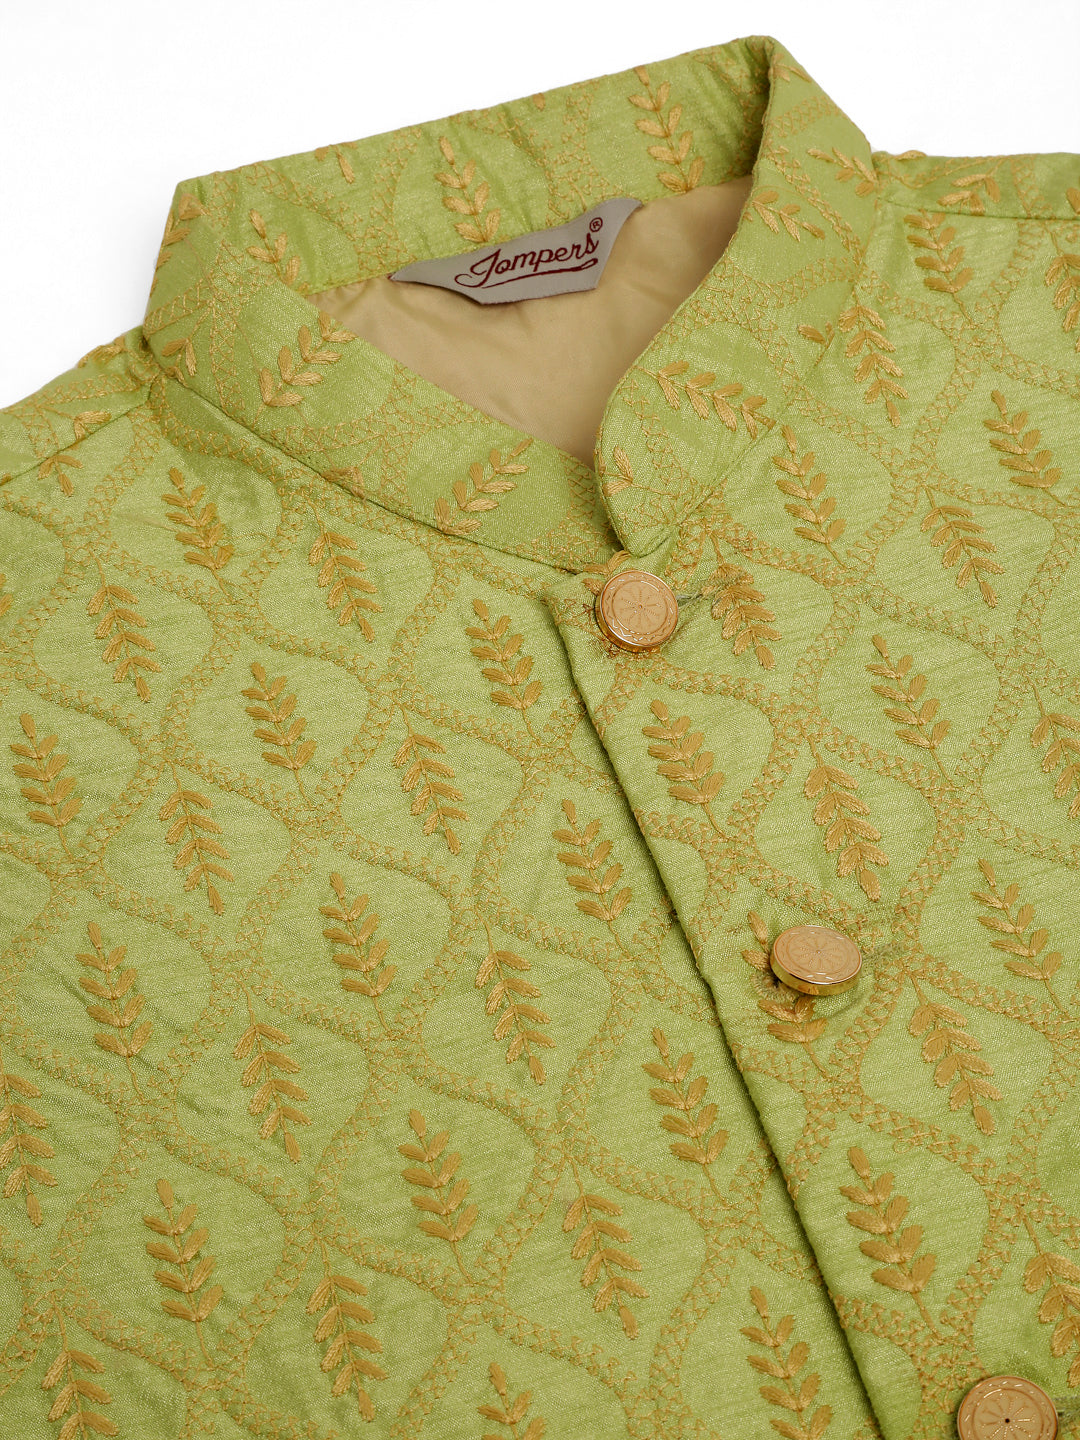 Men's Embroidered Waistcoat ( JOWC 4049Green )